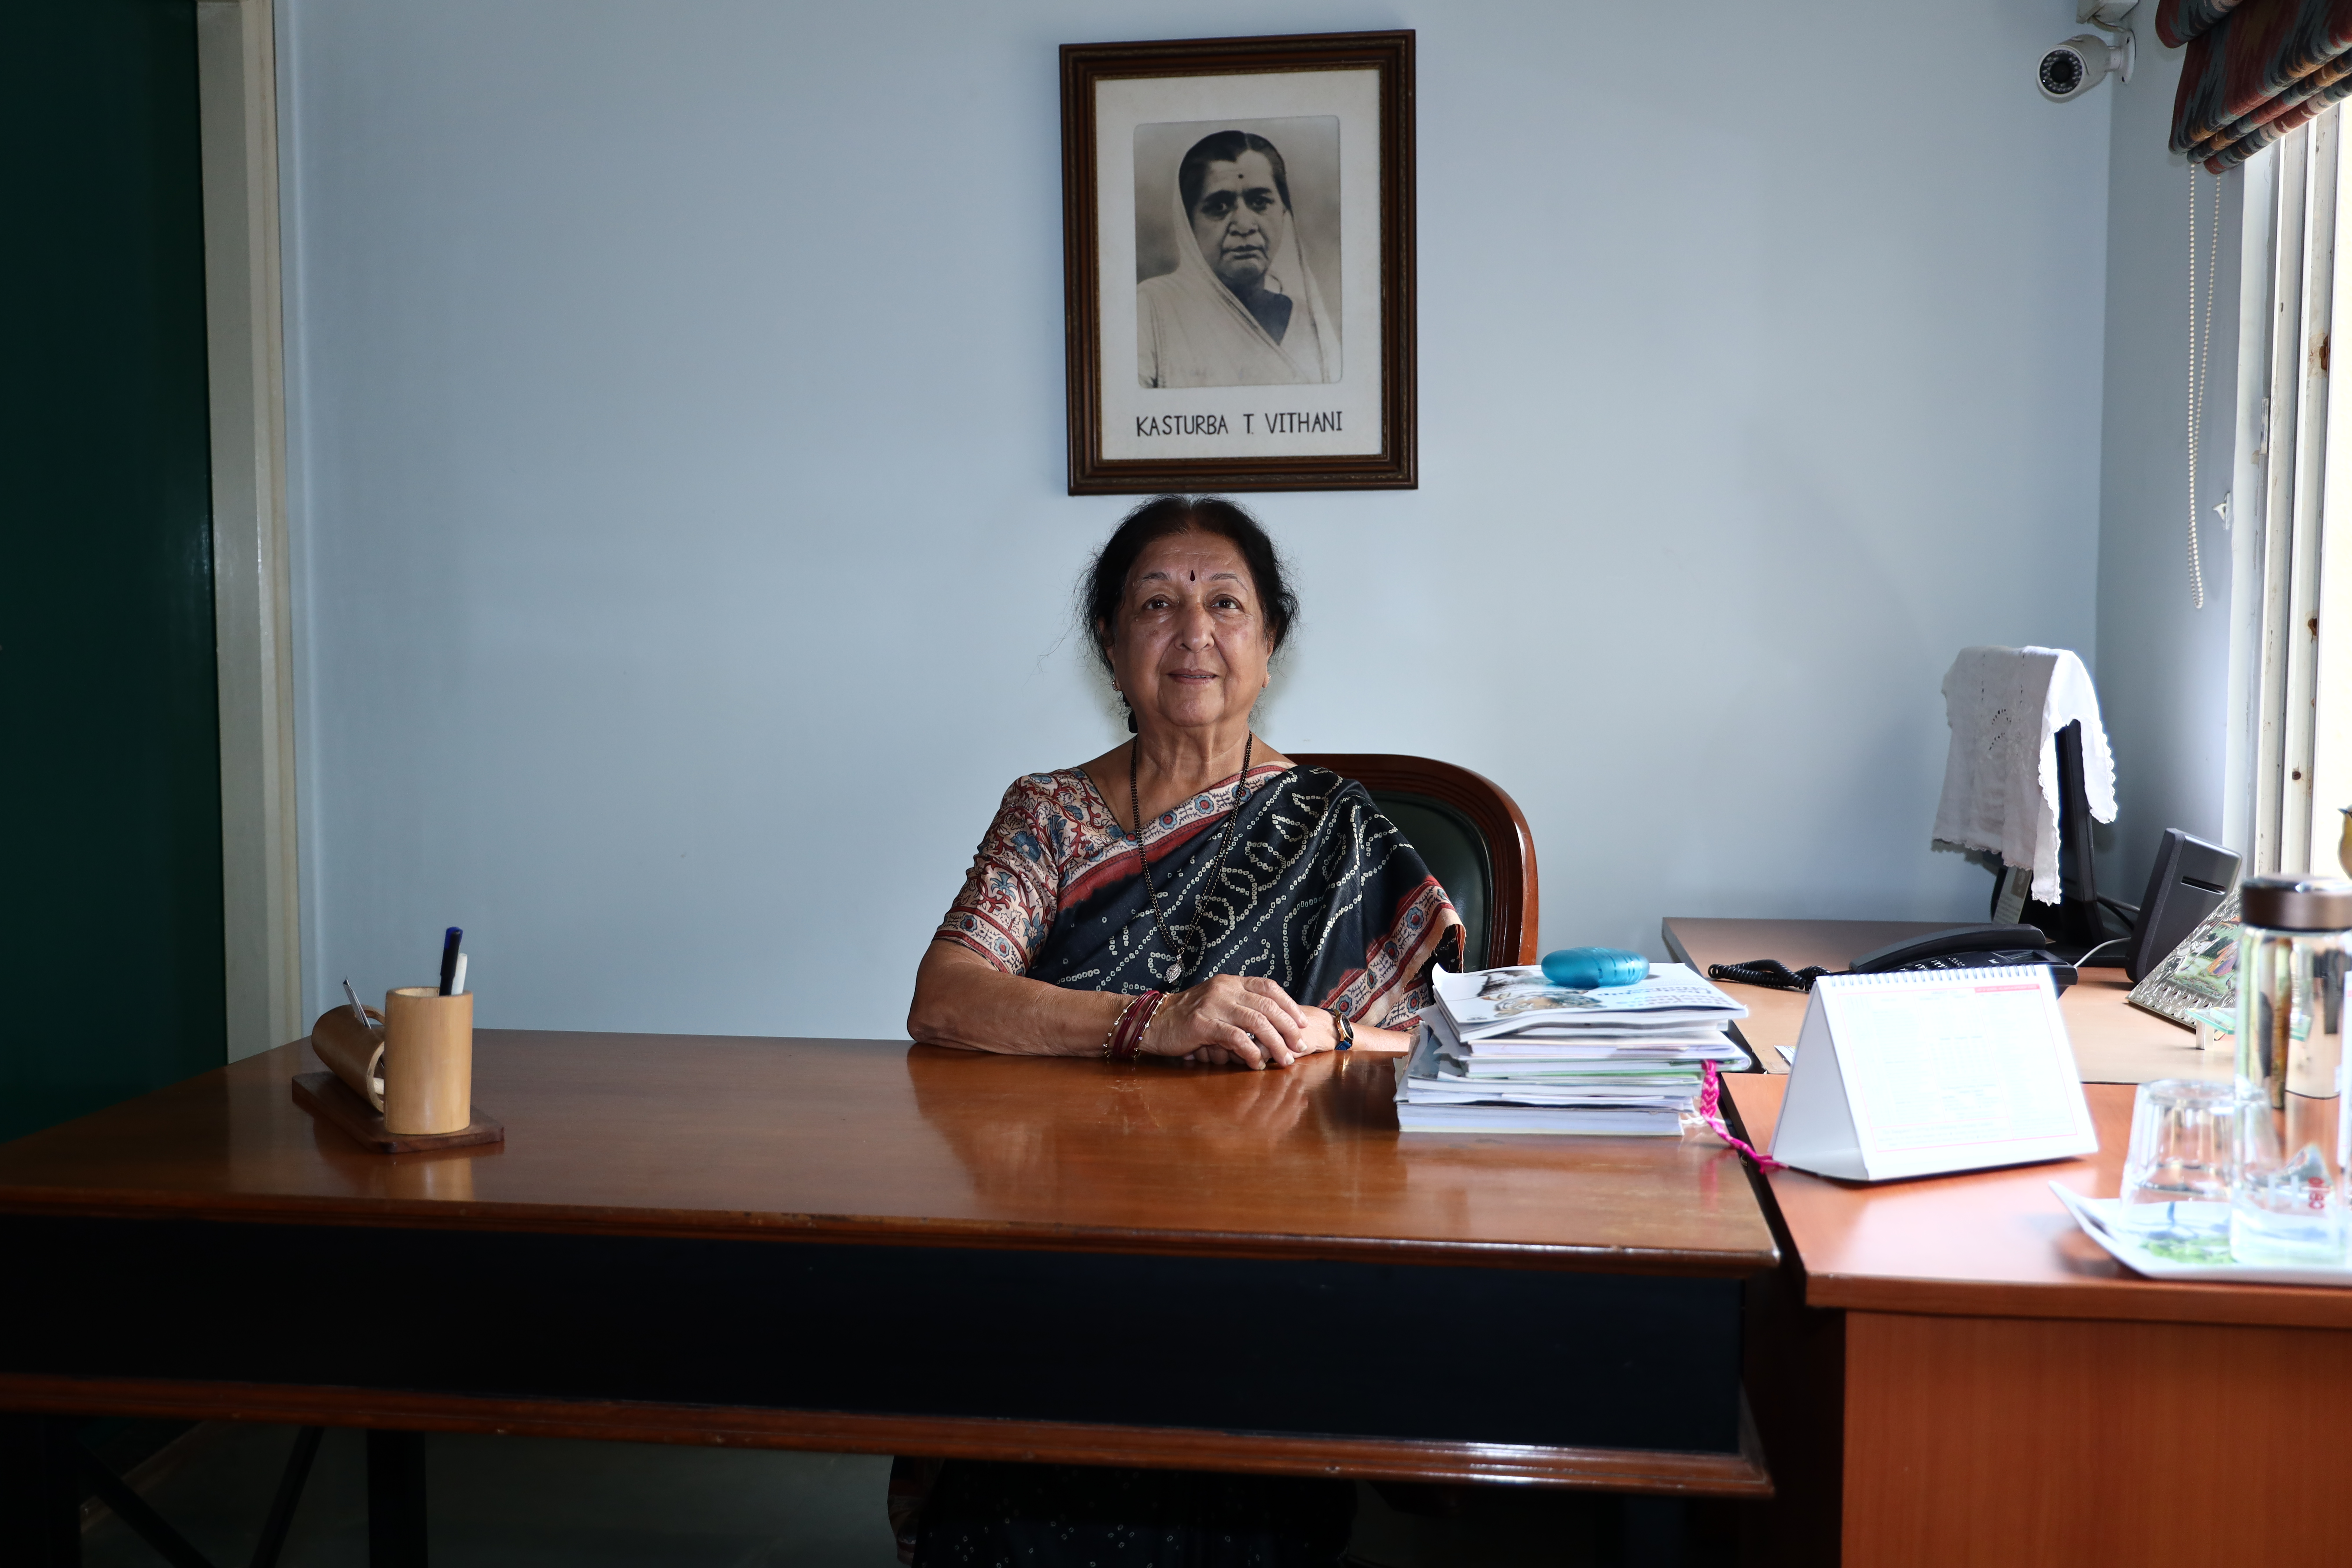 Ms. Hansa Vithani